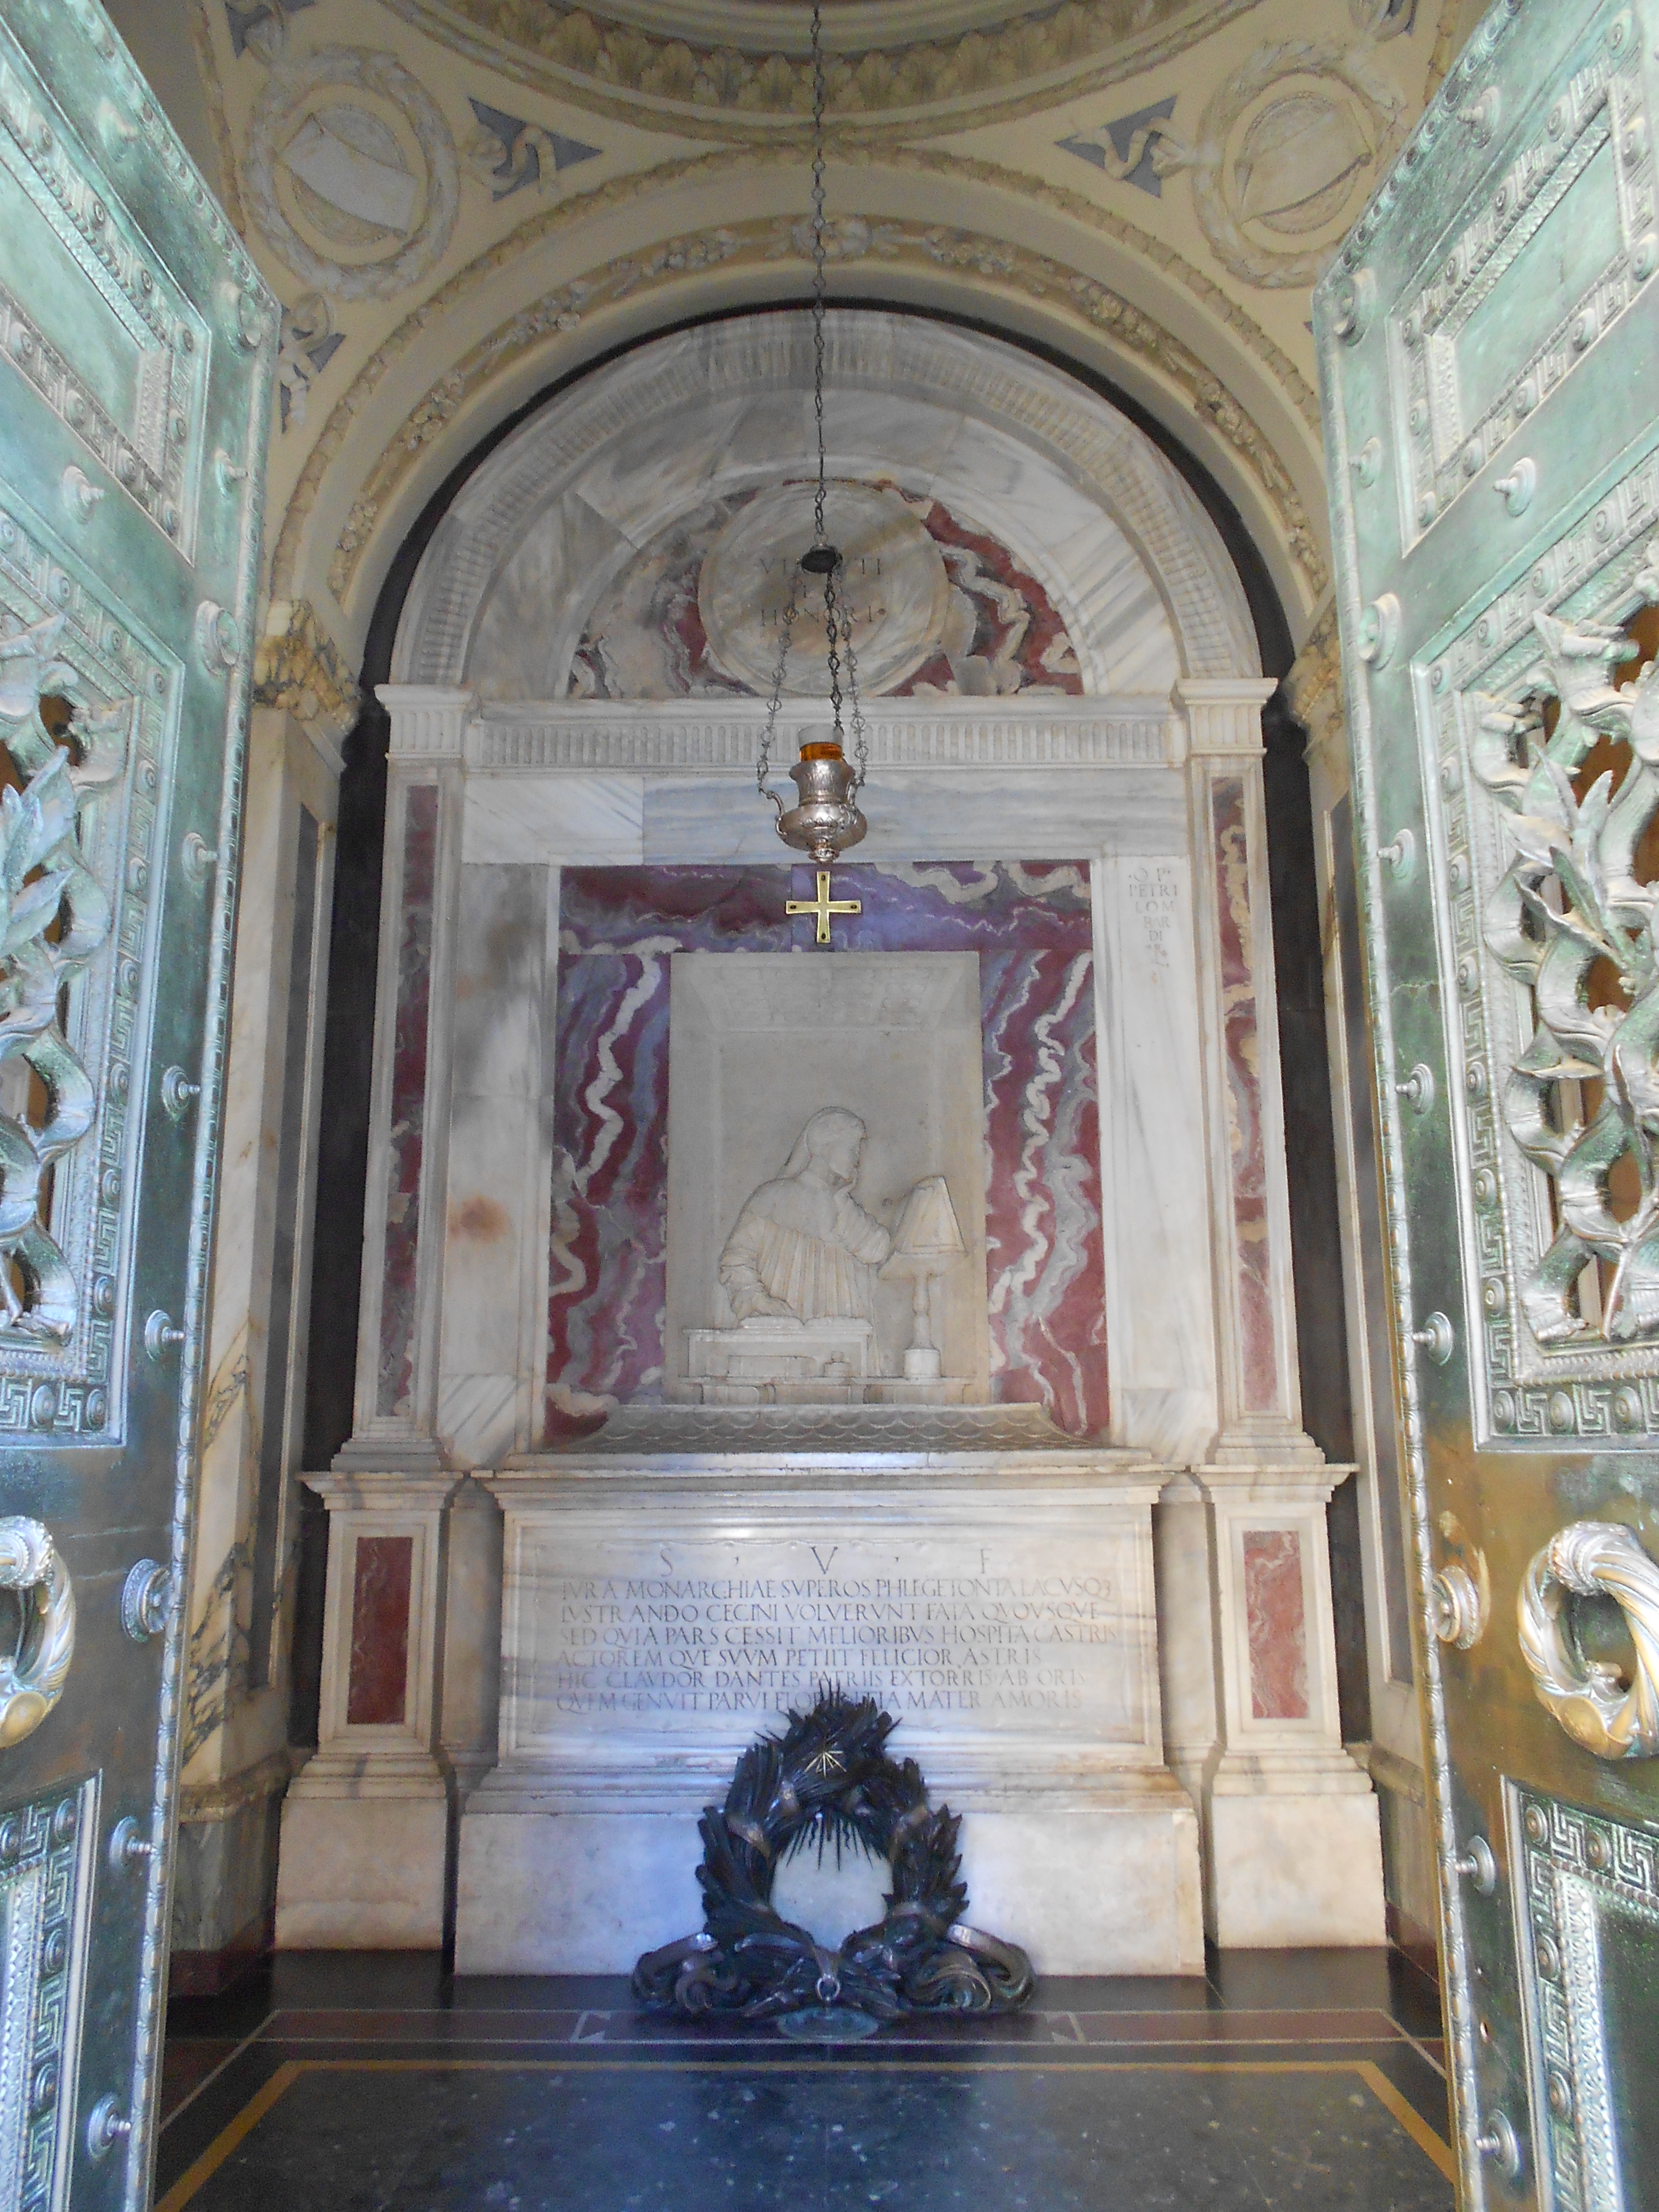 photo: https://upload.wikimedia.org/wikipedia/commons/b/b5/Ravenna_-_Tomba_di_Dante.jpg